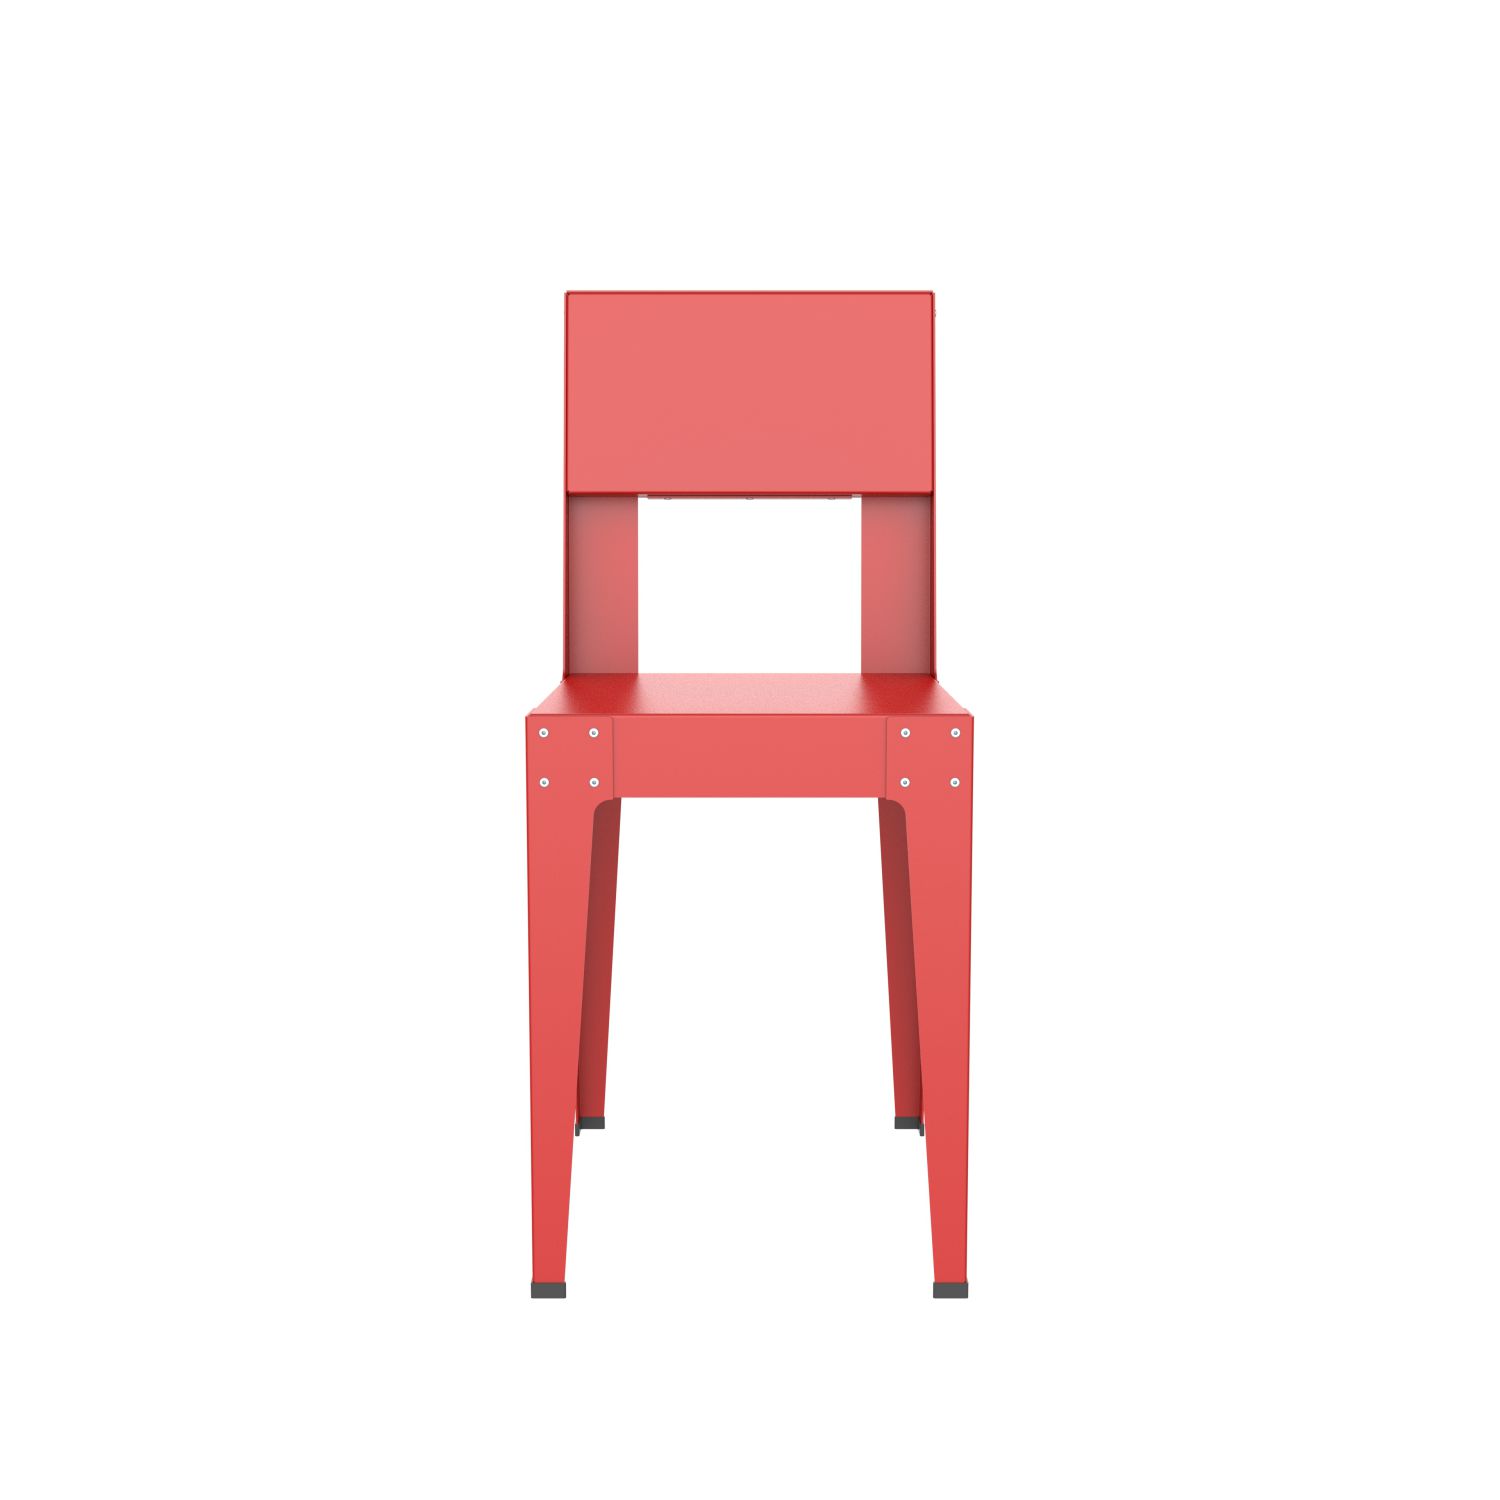 lensvelt piet hein eek aluminium series chair traffic red ral3020 soft leg ends